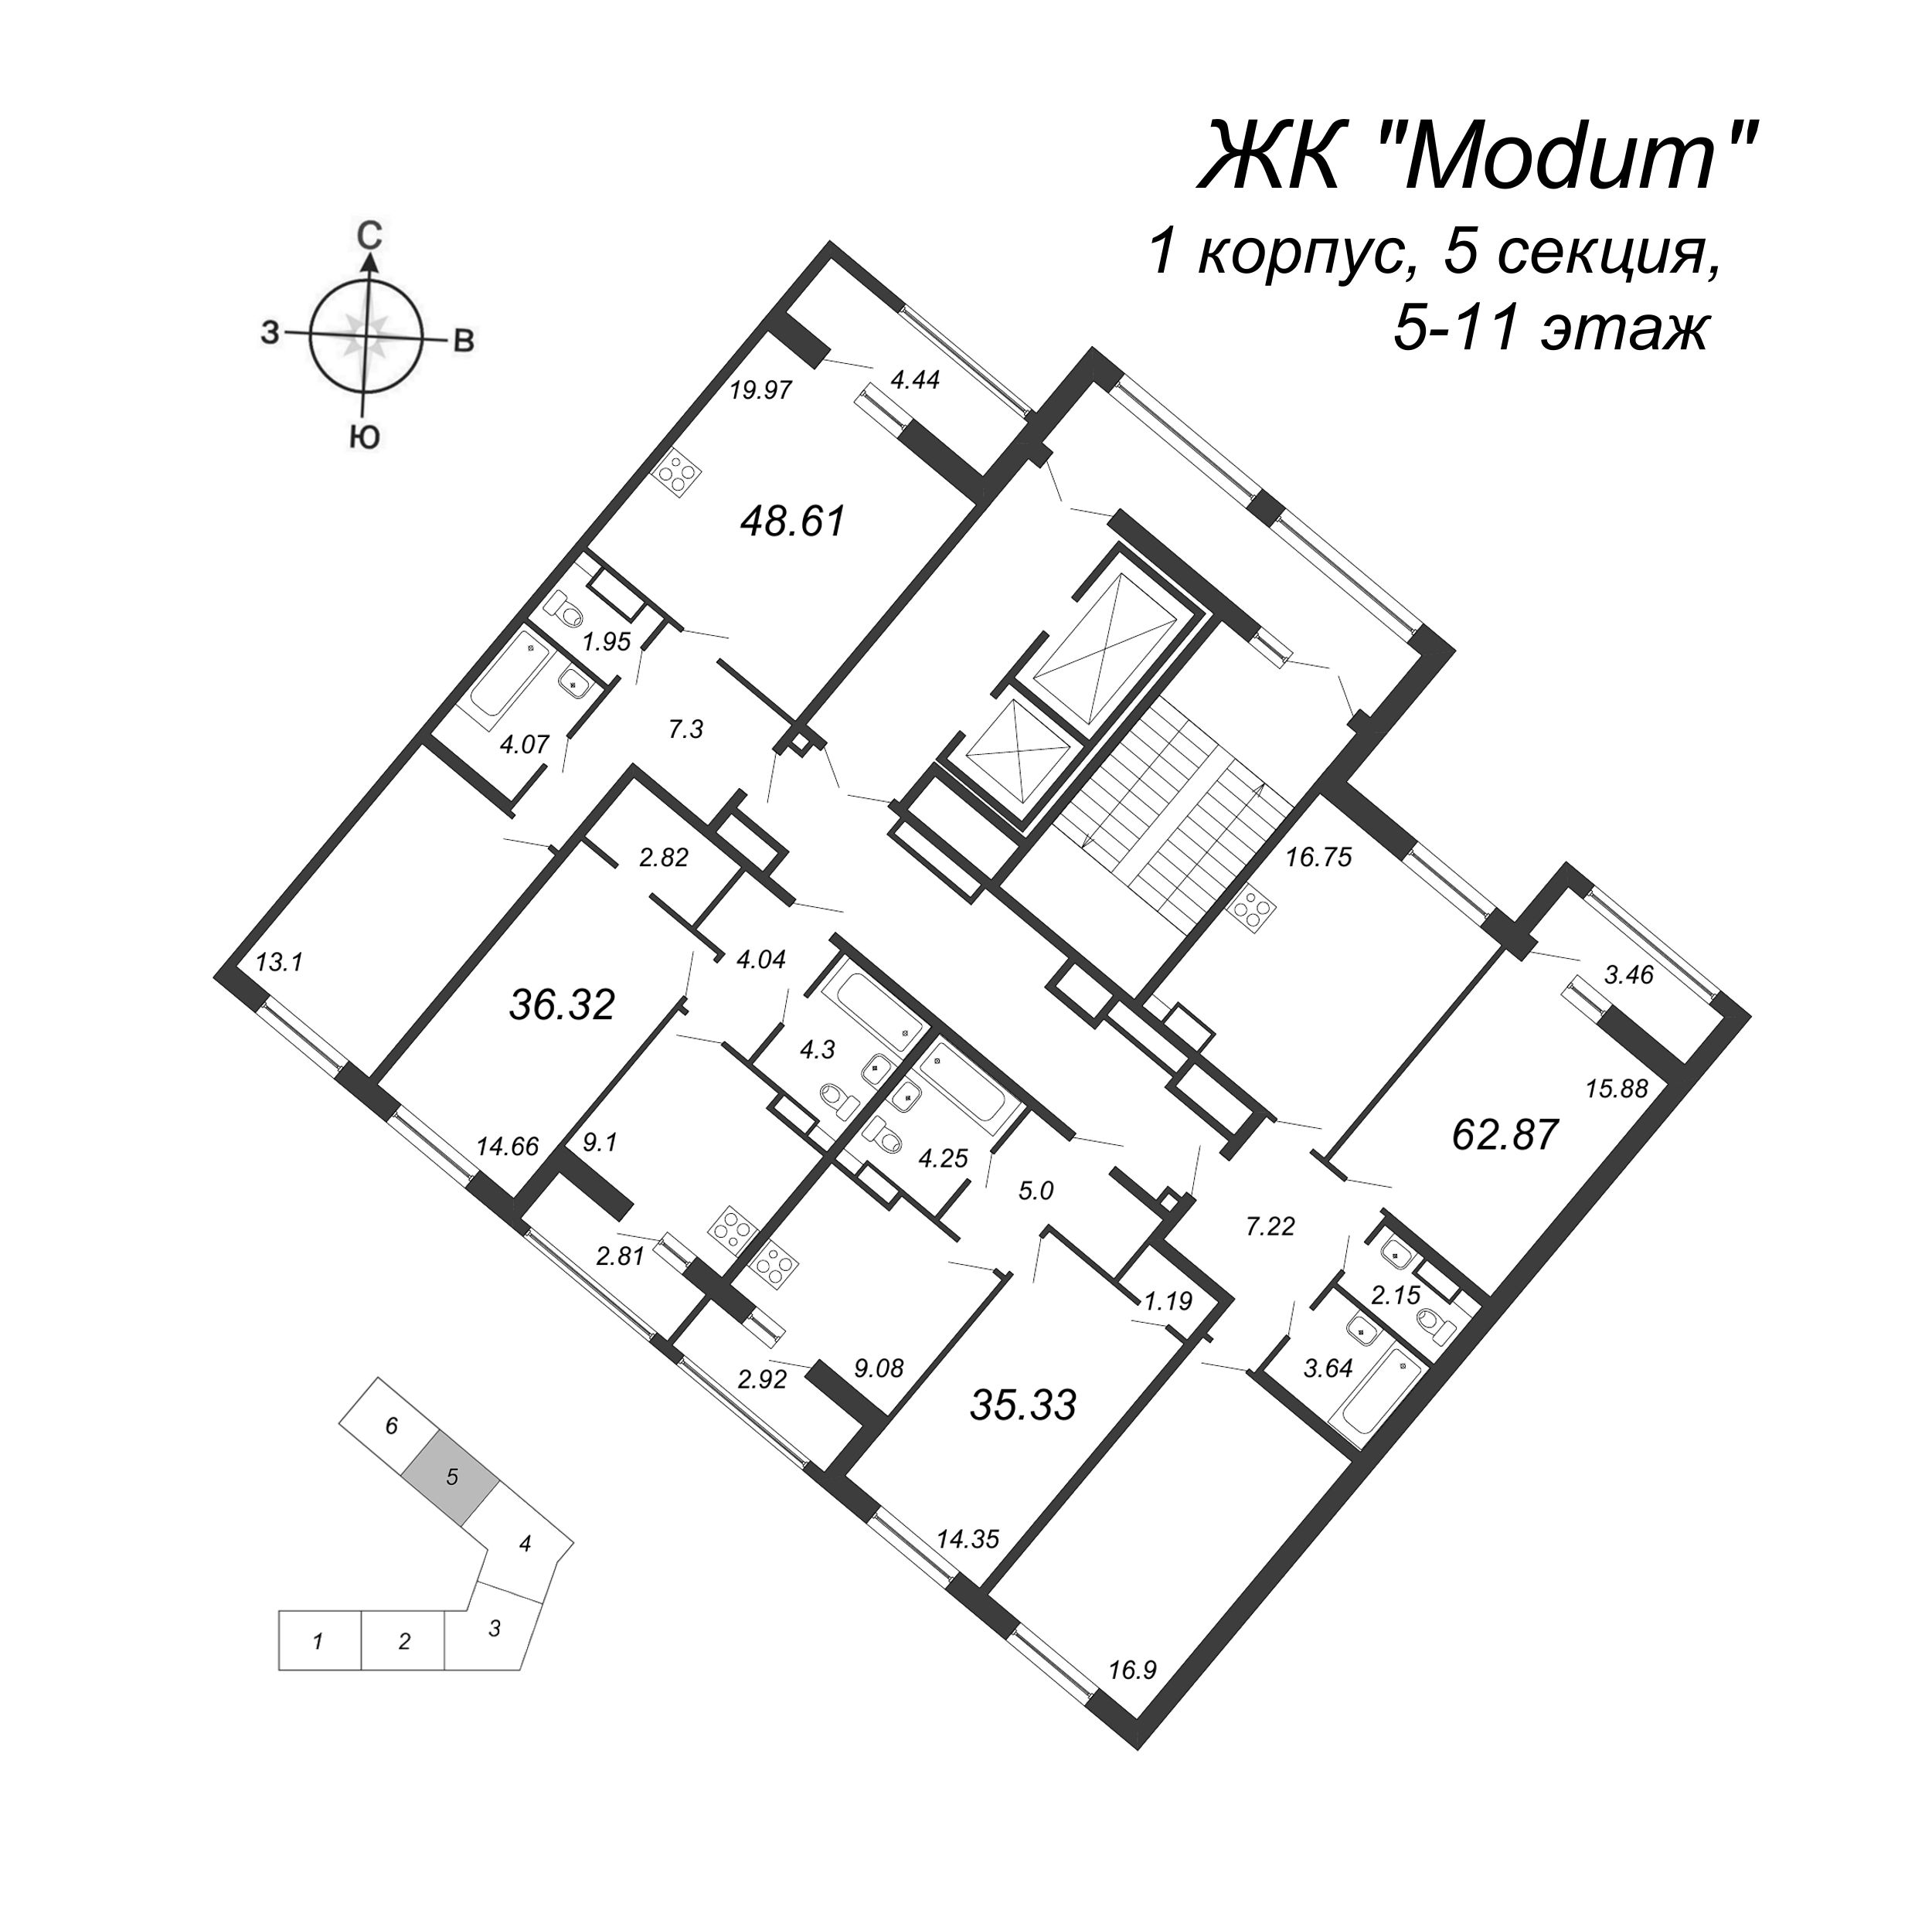 3-комнатная (Евро) квартира, 62.87 м² - планировка этажа